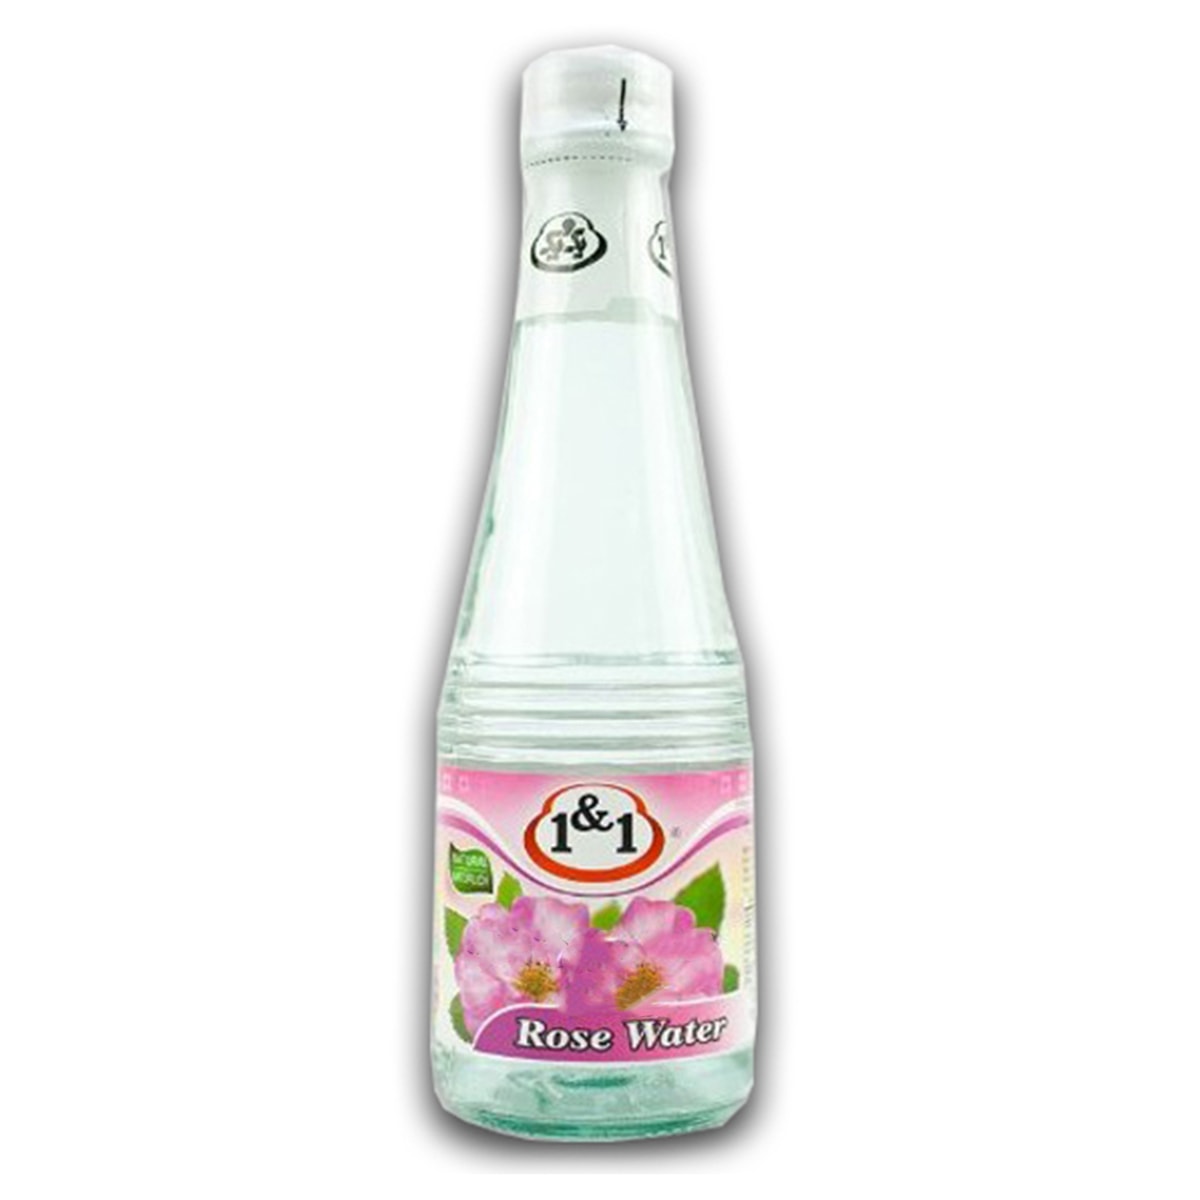 Buy 1 & 1 Rose Water - 330 ml